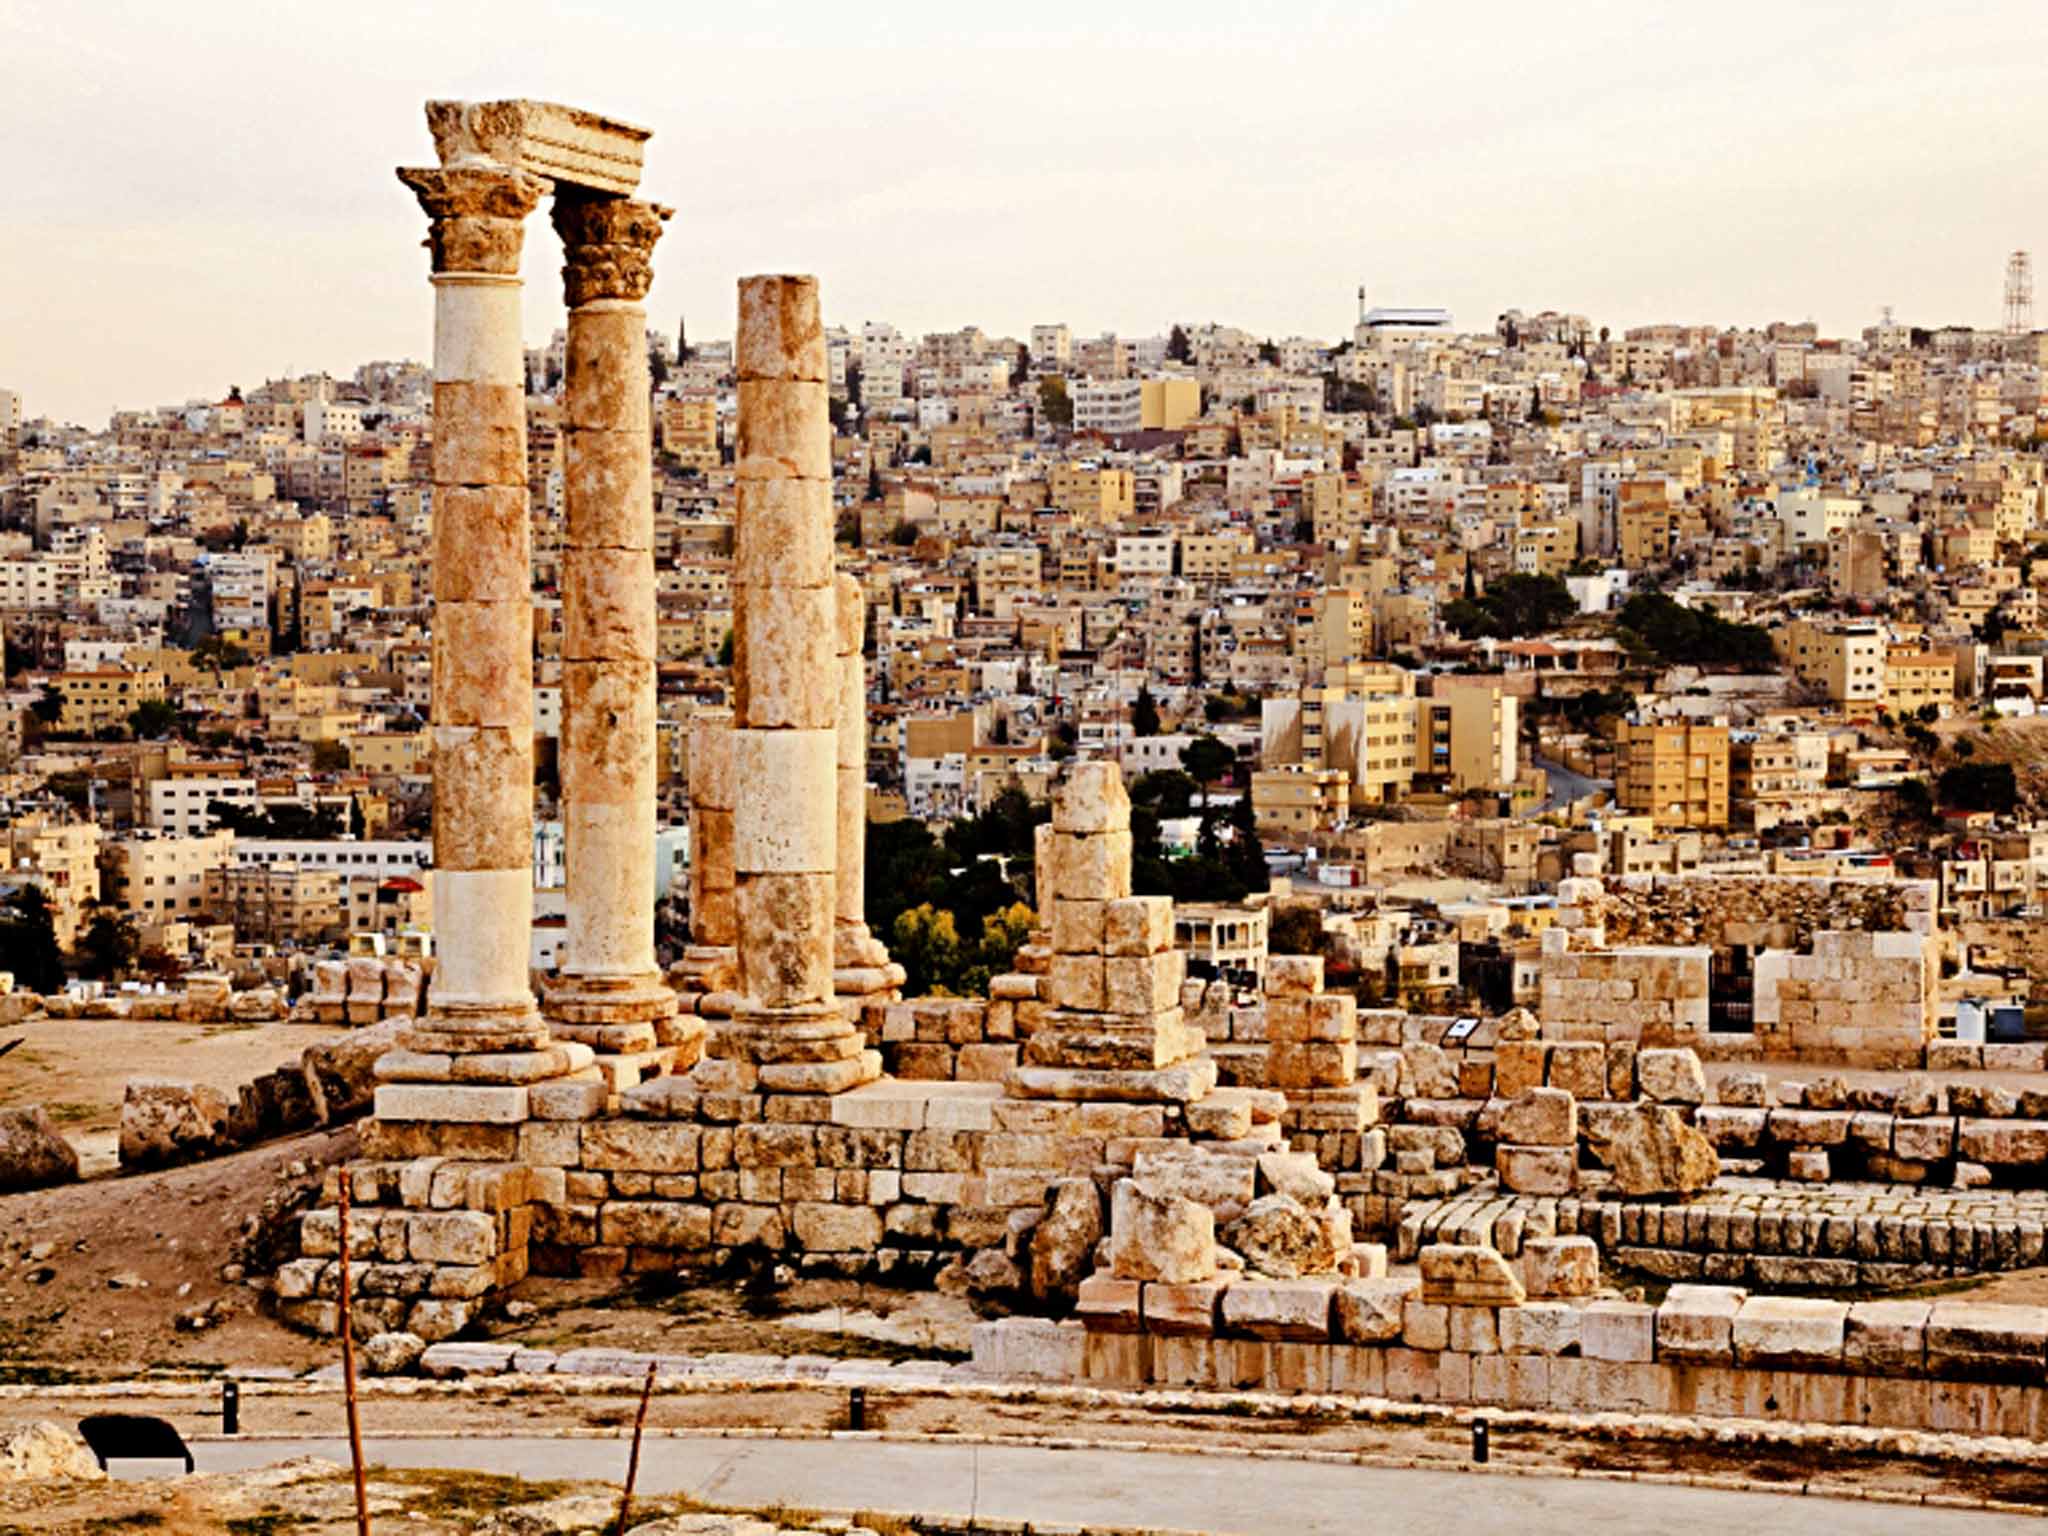 Amman to that: Paul Hollywood plans to return to Jordan